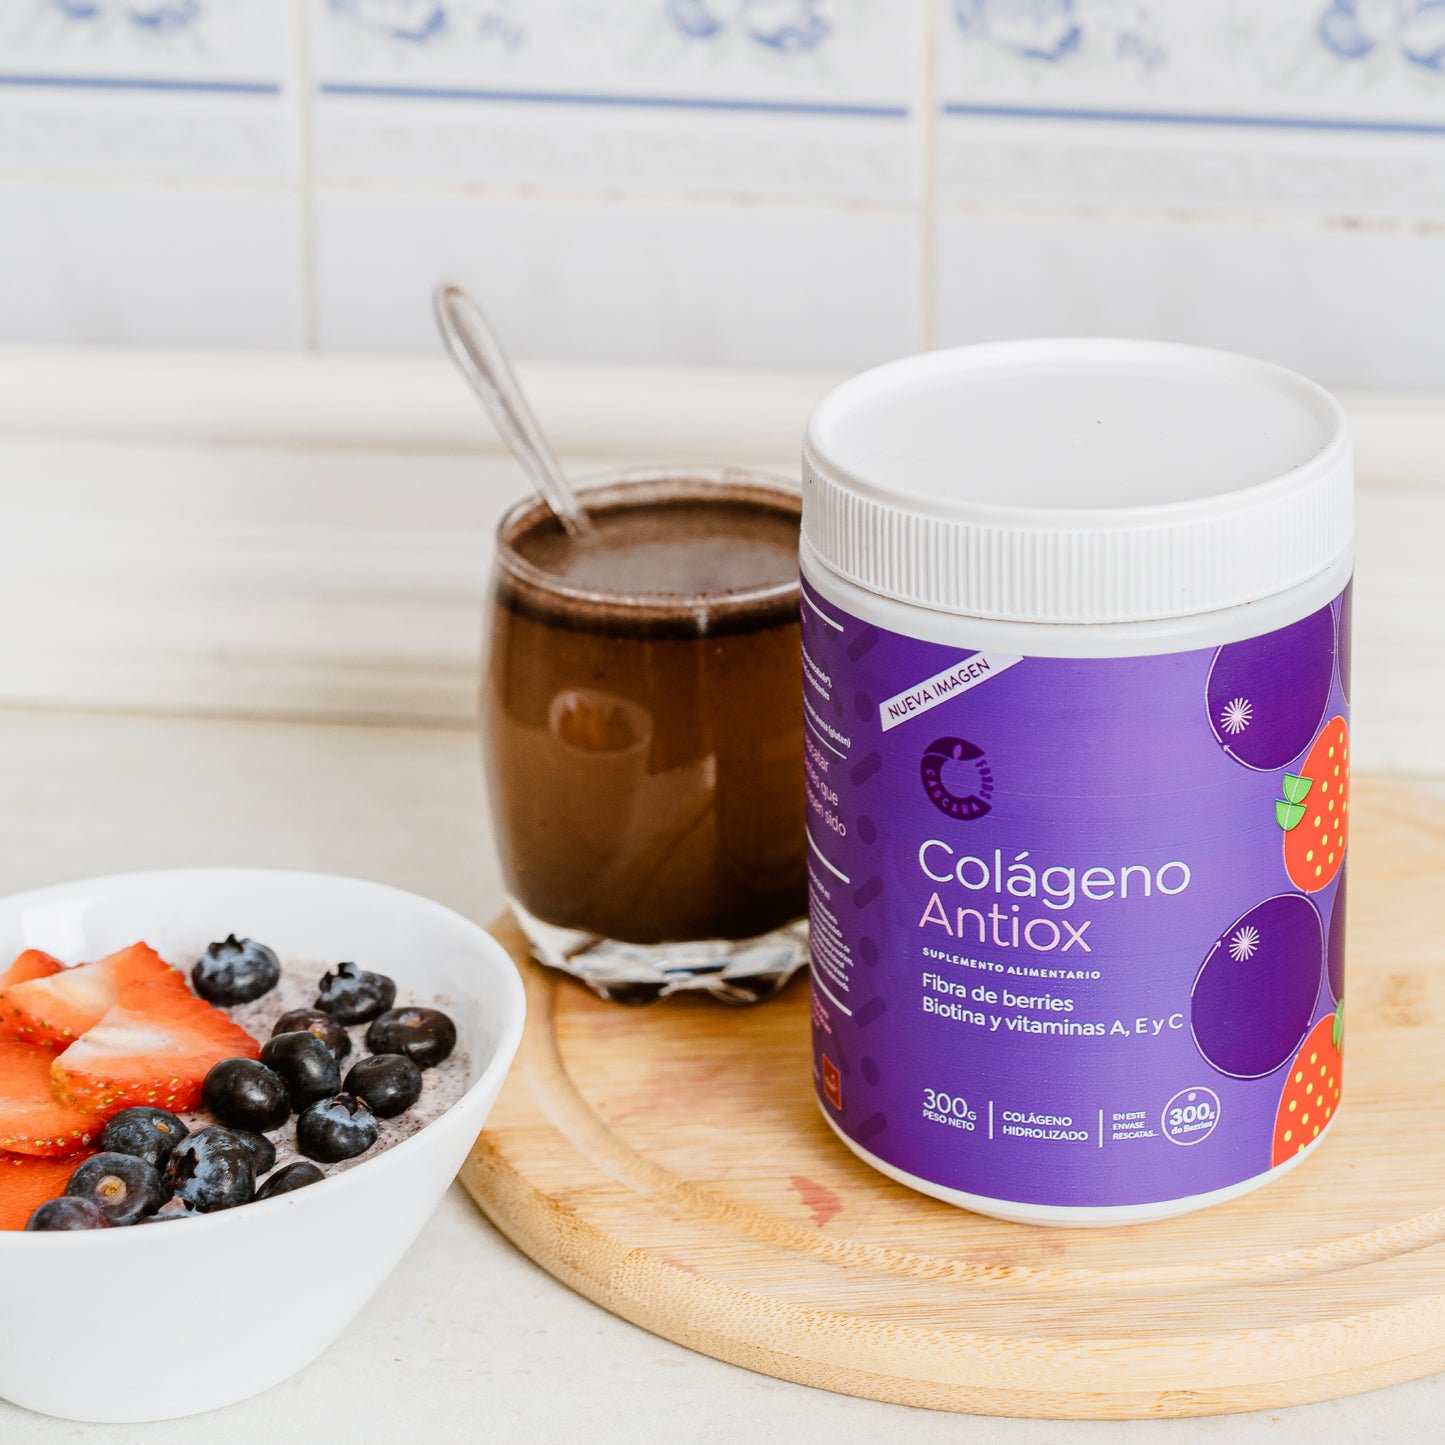 Colágeno Antiox + Azana Prebiotic + Eco Shaker